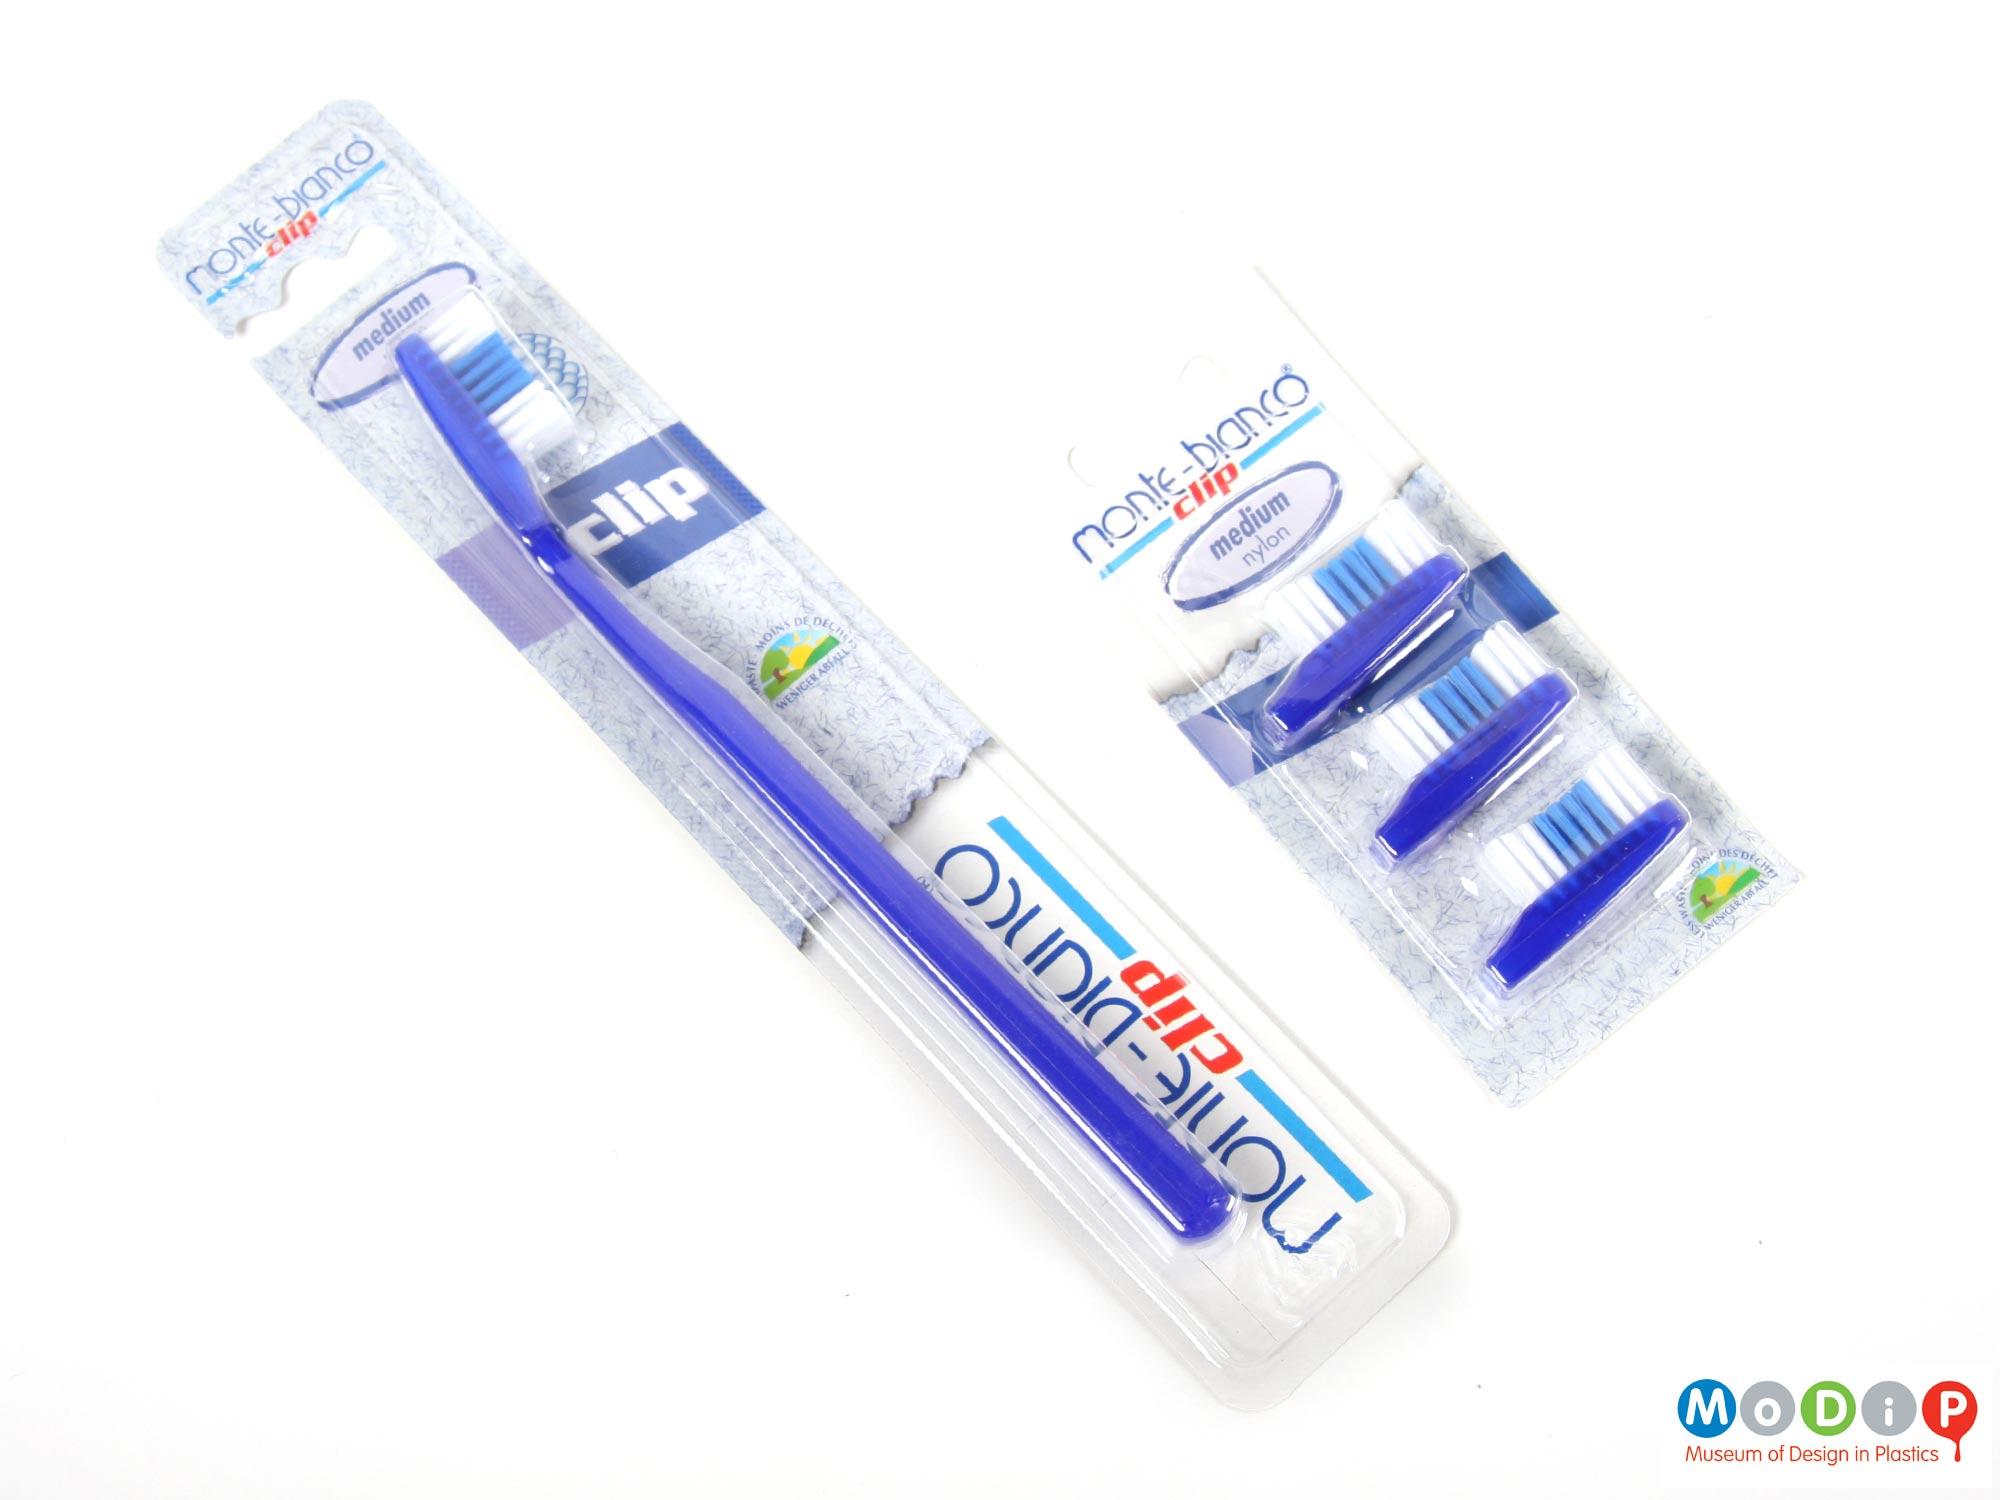 Monte-Bianco Clip toothbrush heads | Museum of Design in Plastics